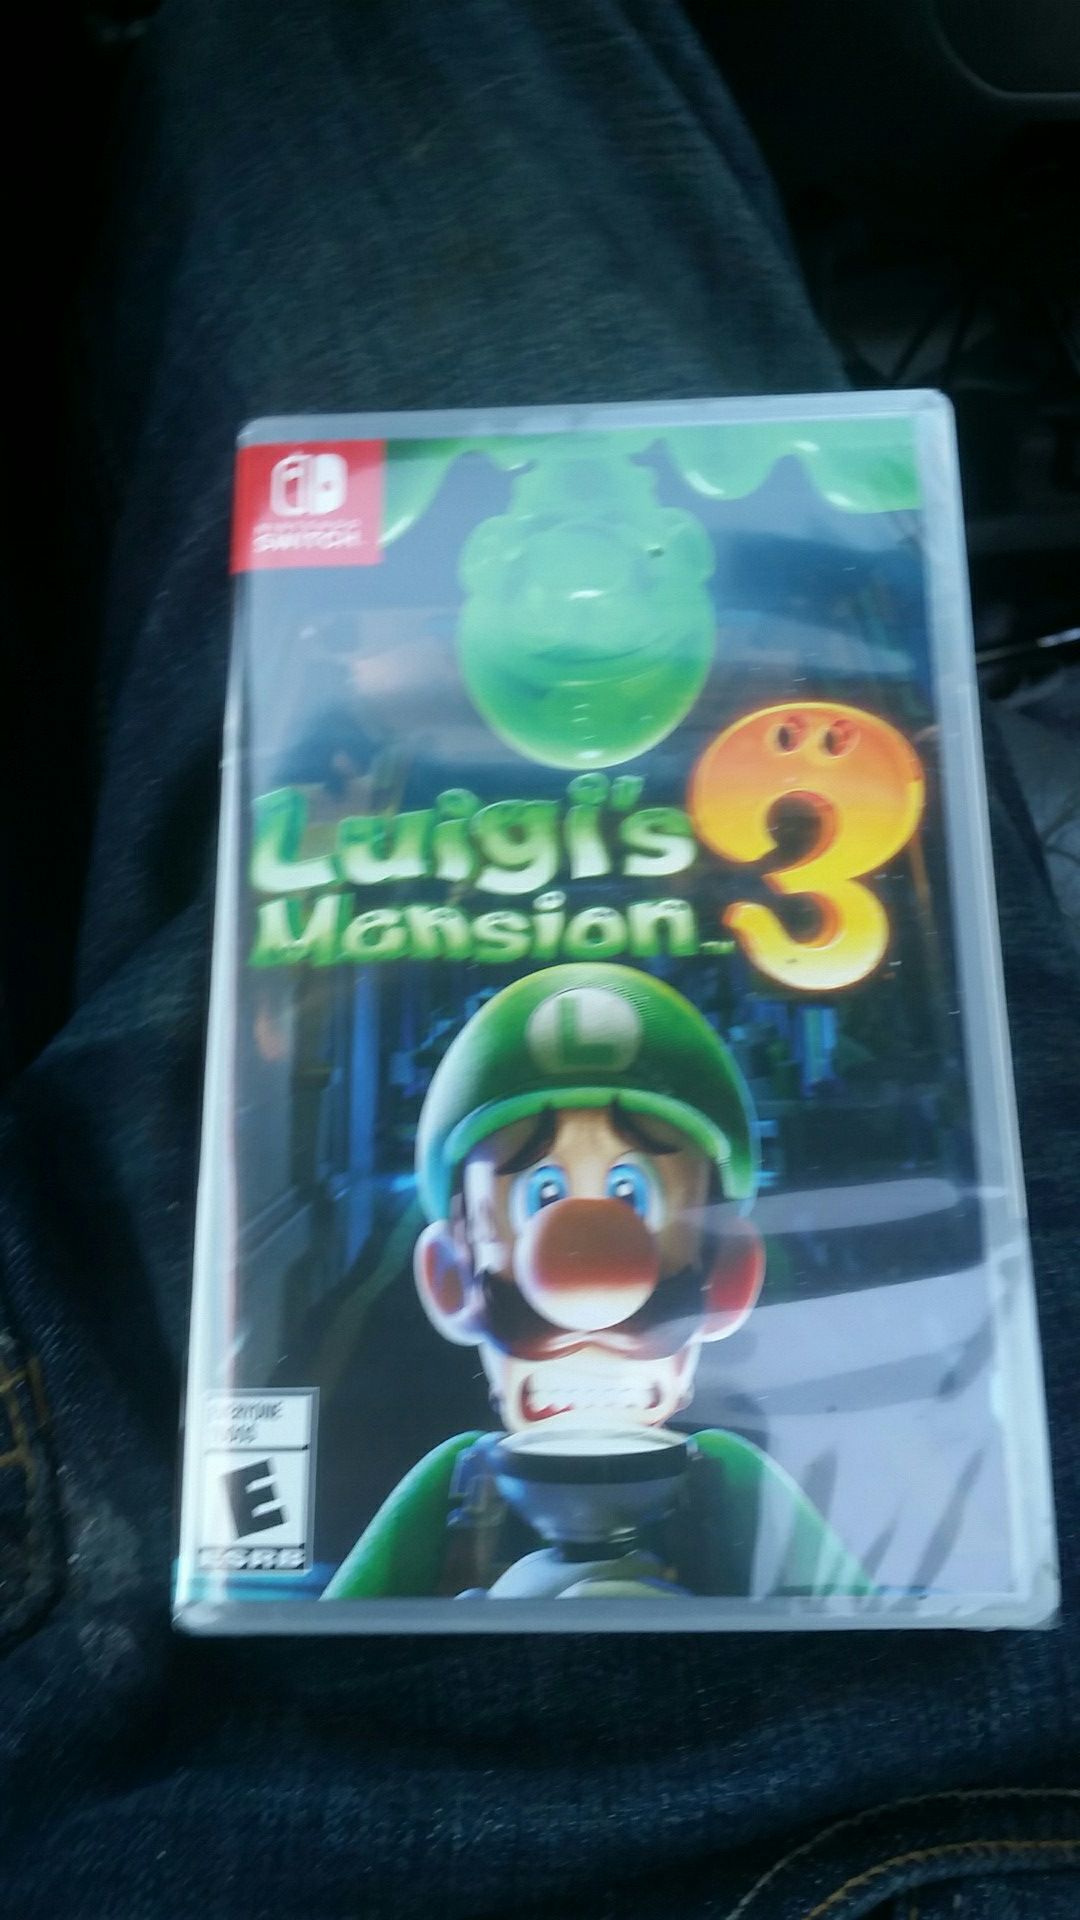 Luigis mansion 3 for Nintendo switch